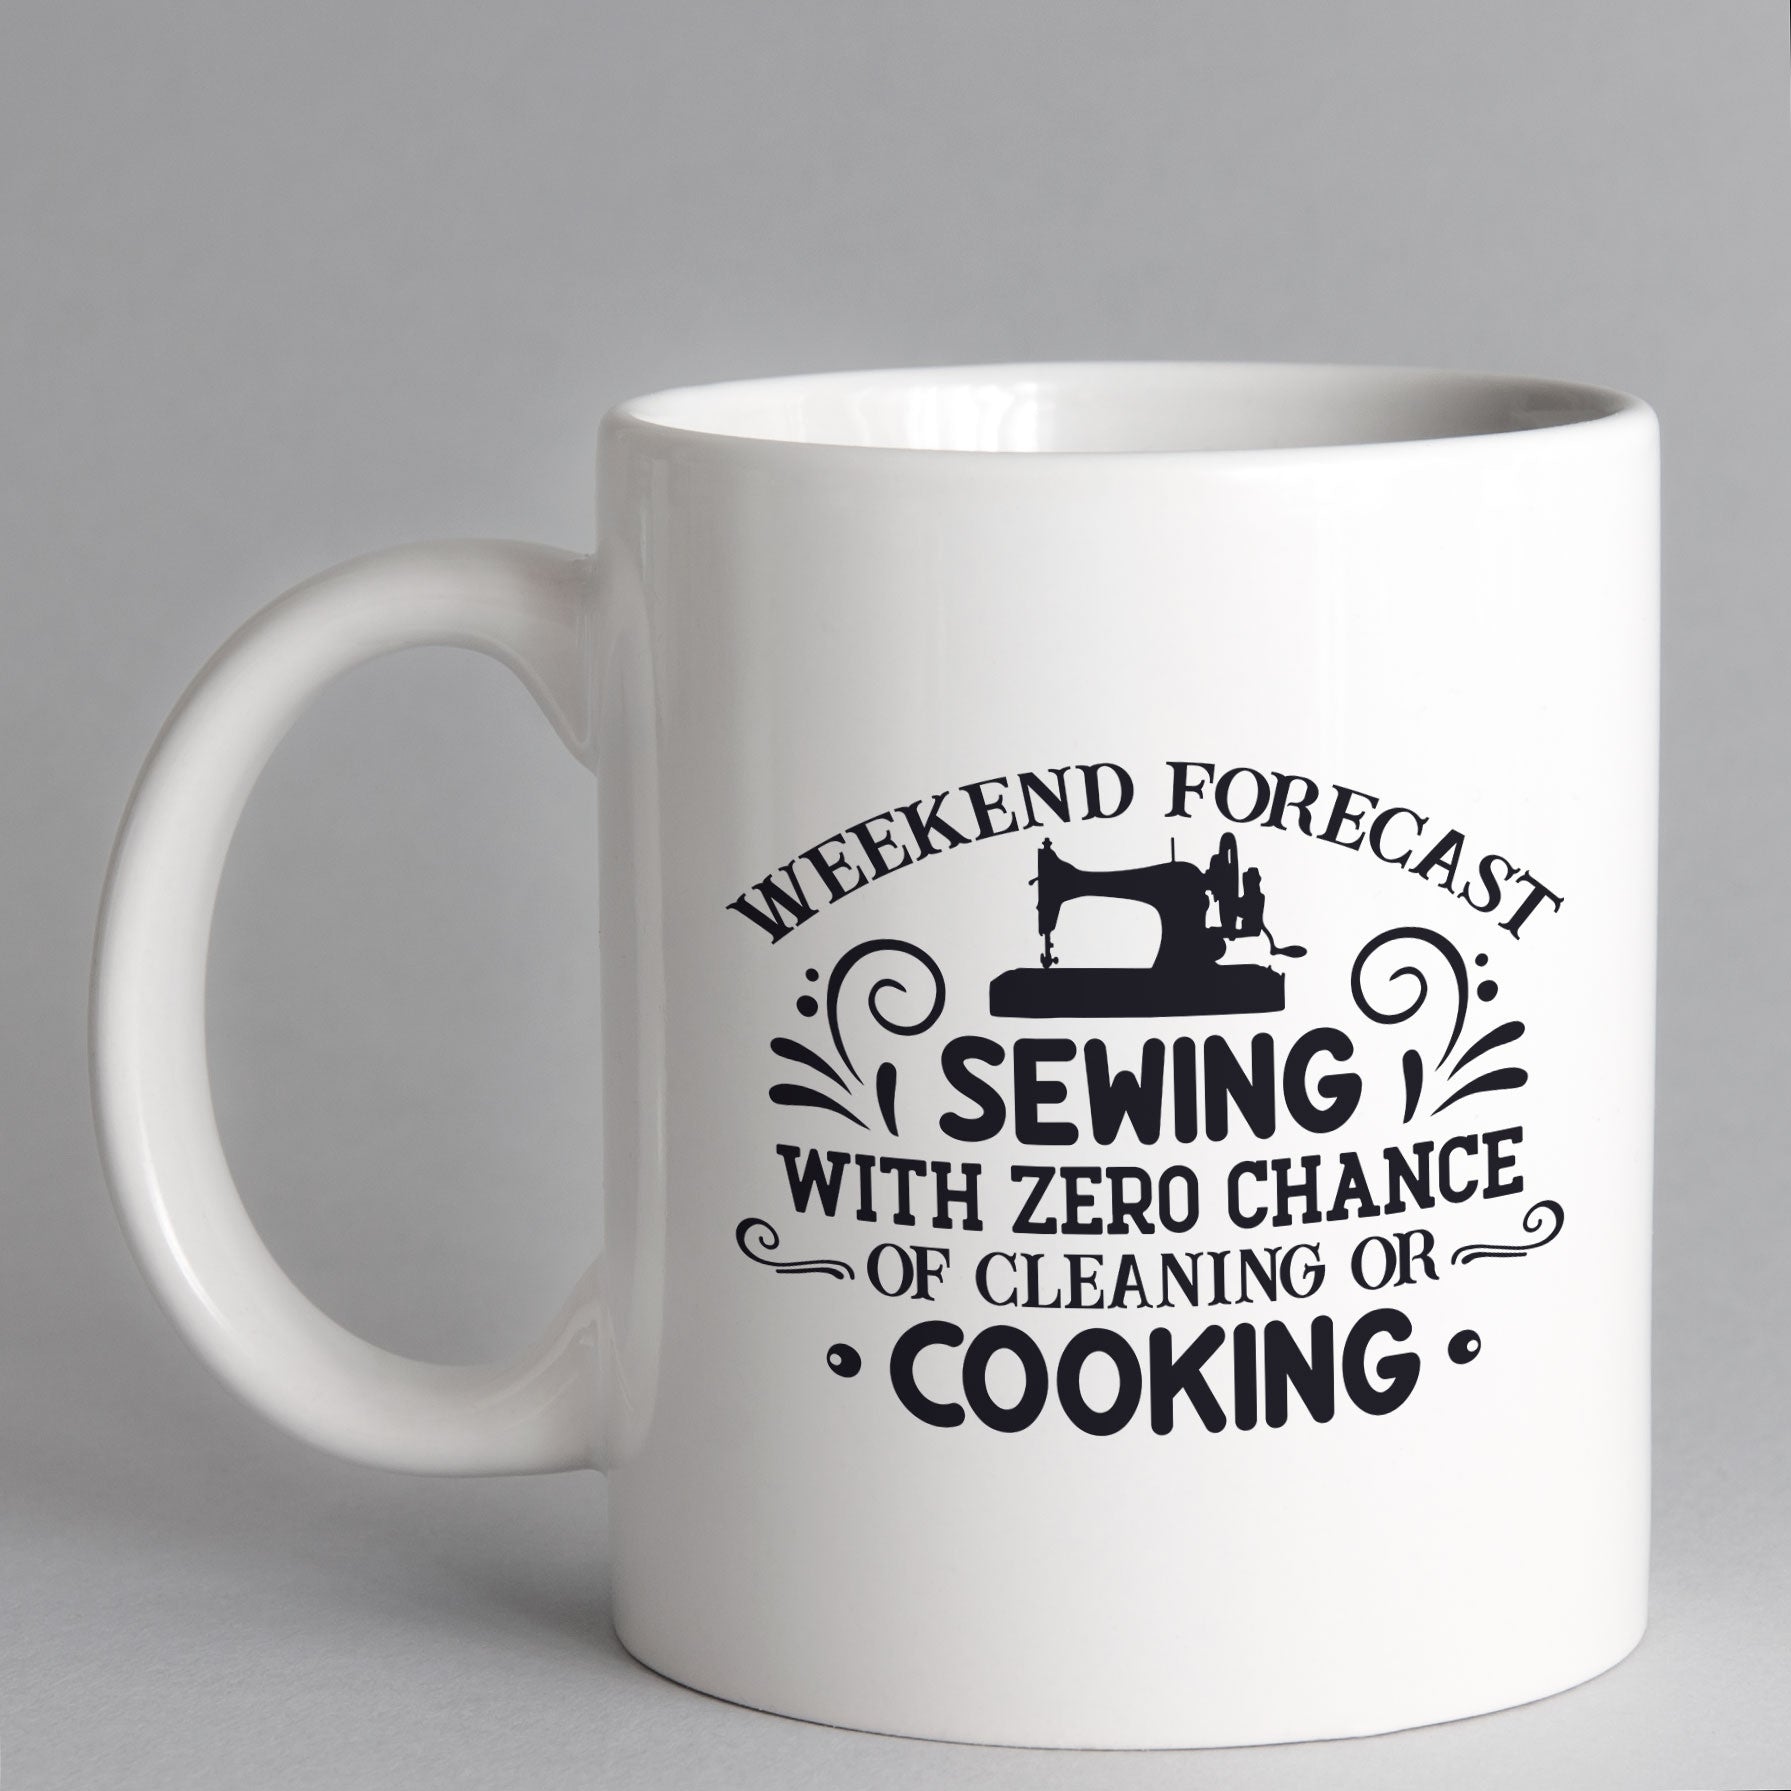 Weekend Forecast Classic Sewing Mug